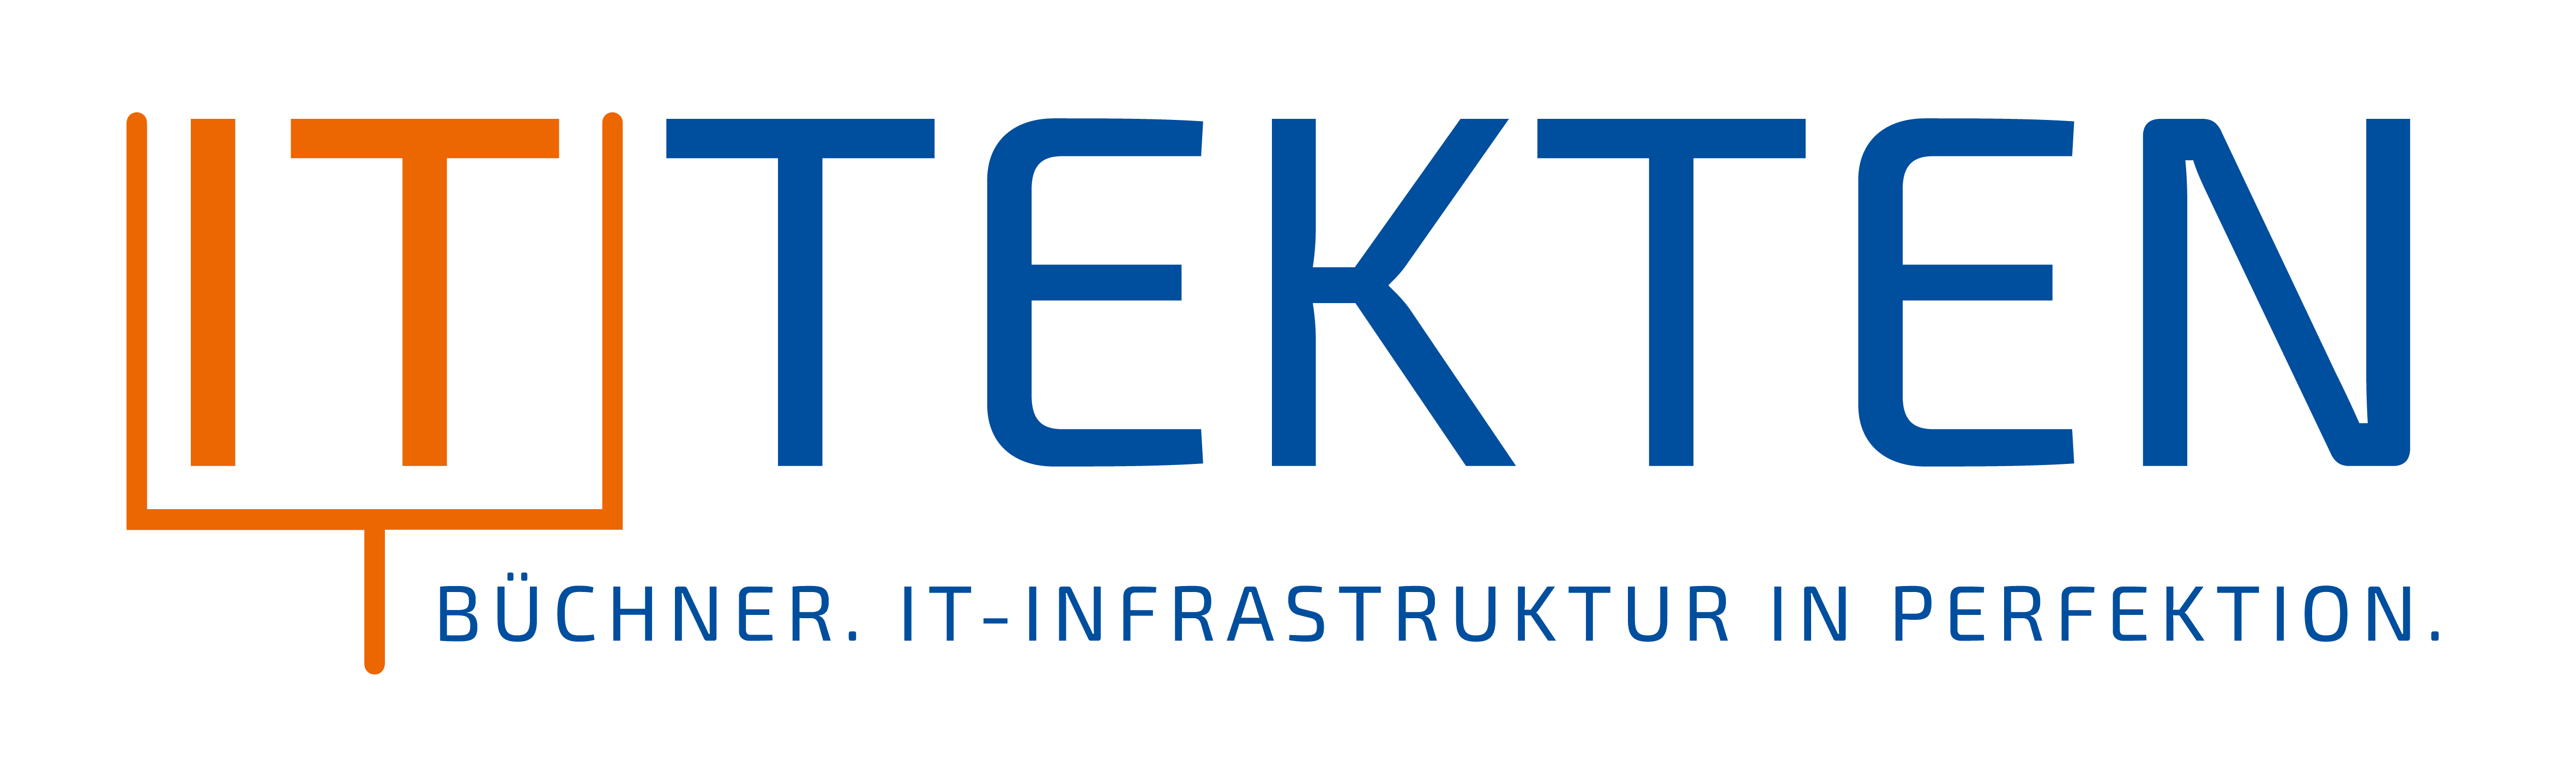 IT-Tekten GmbH